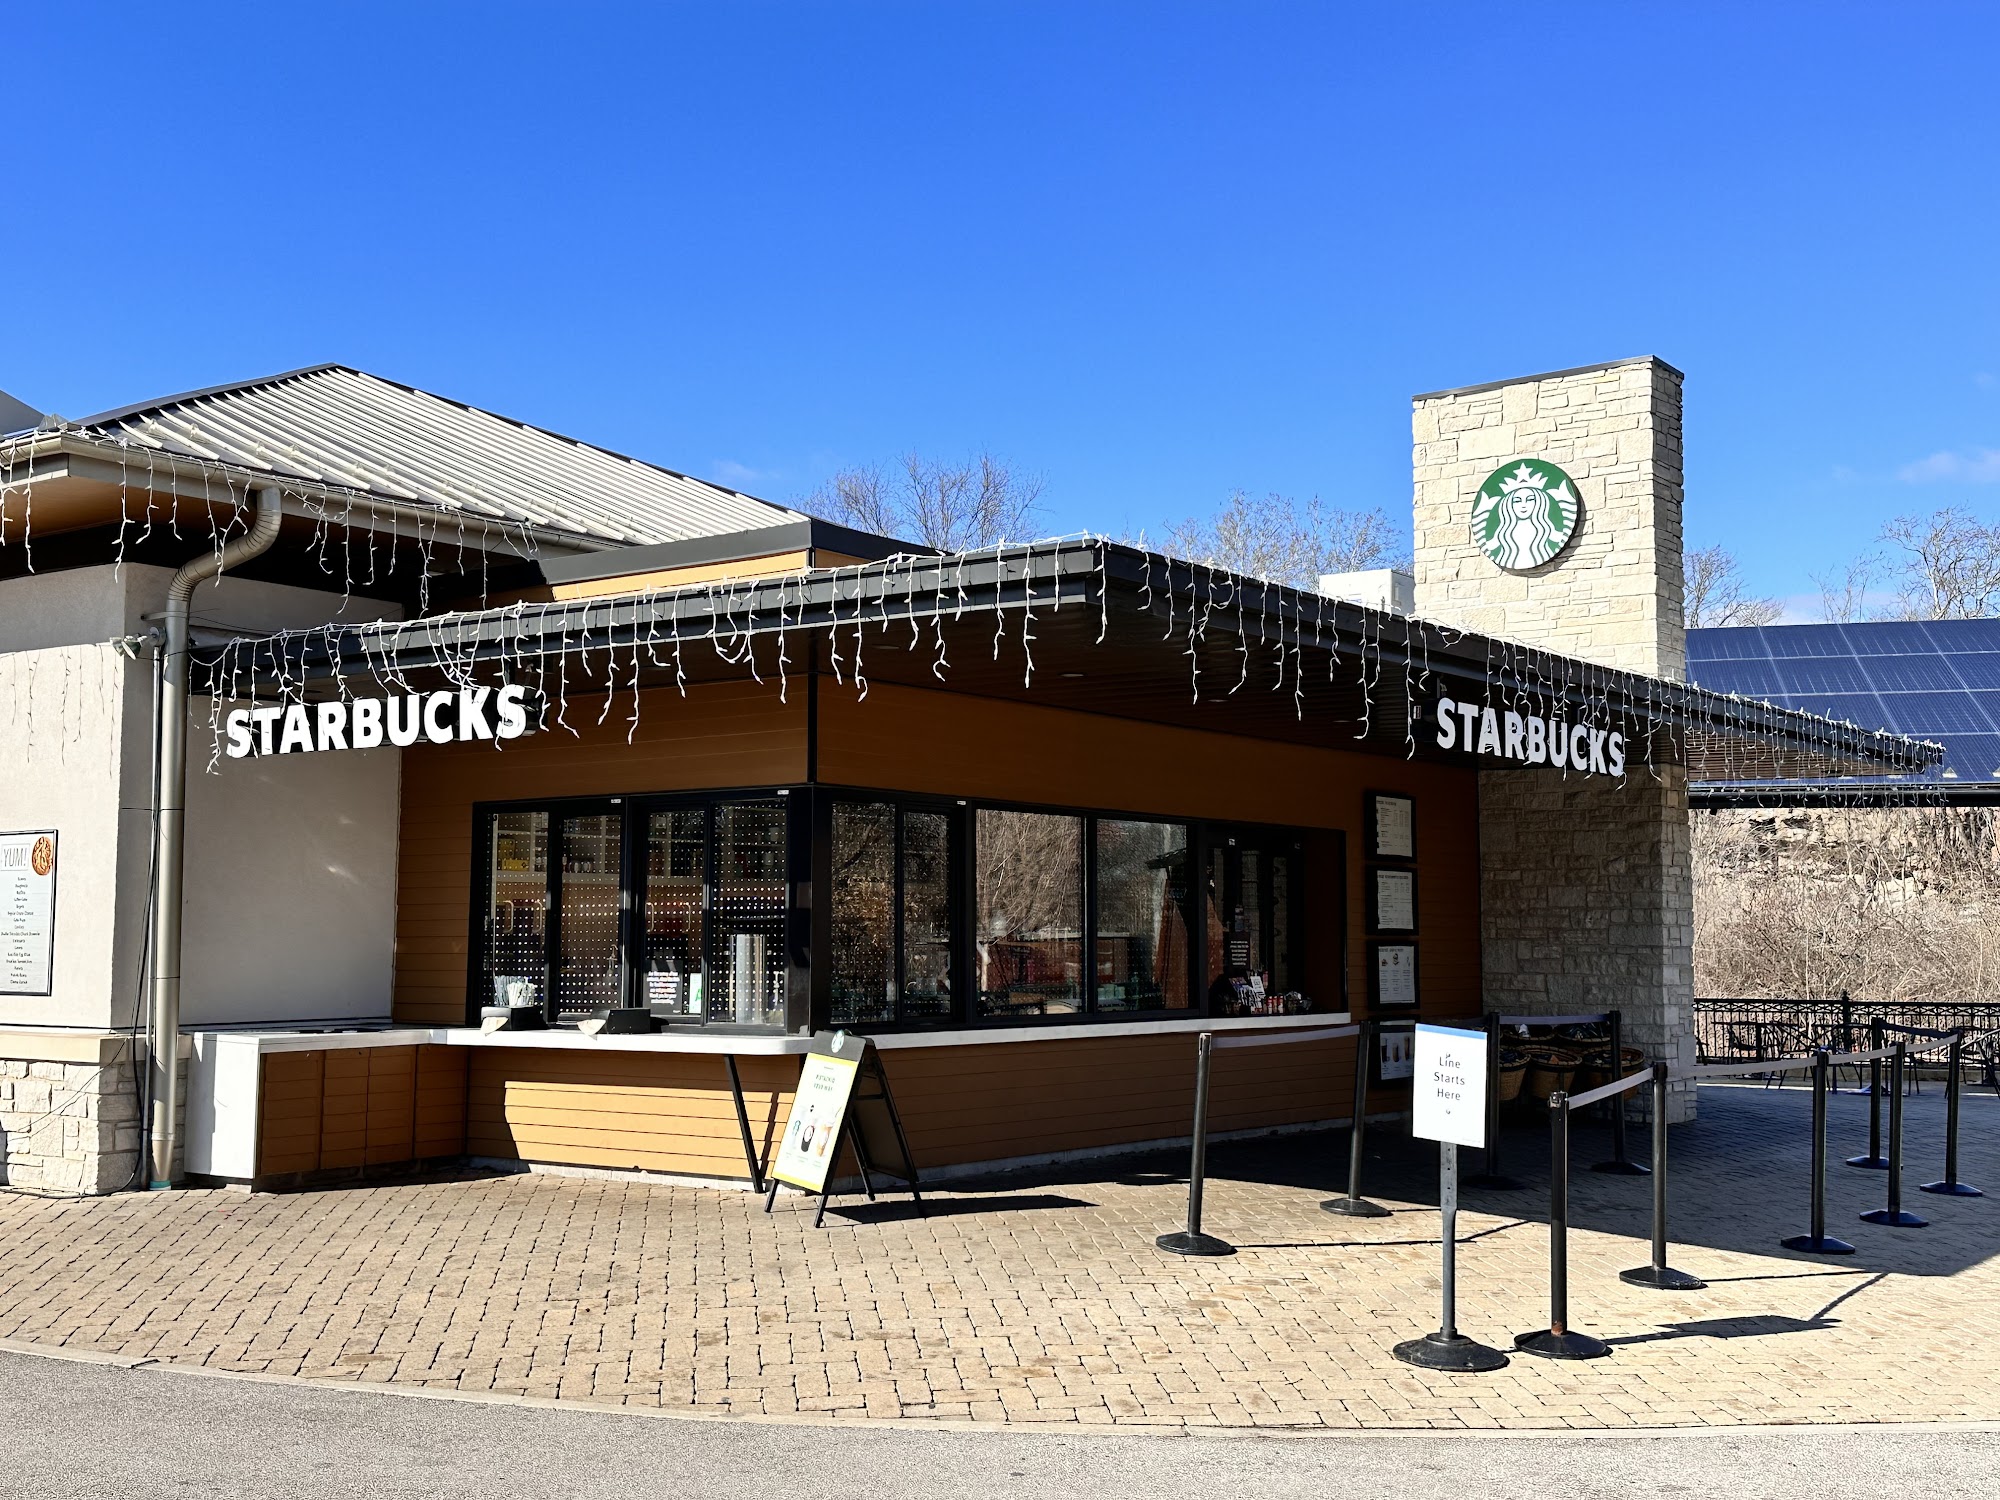 Starbucks at Saint Louis Zoo